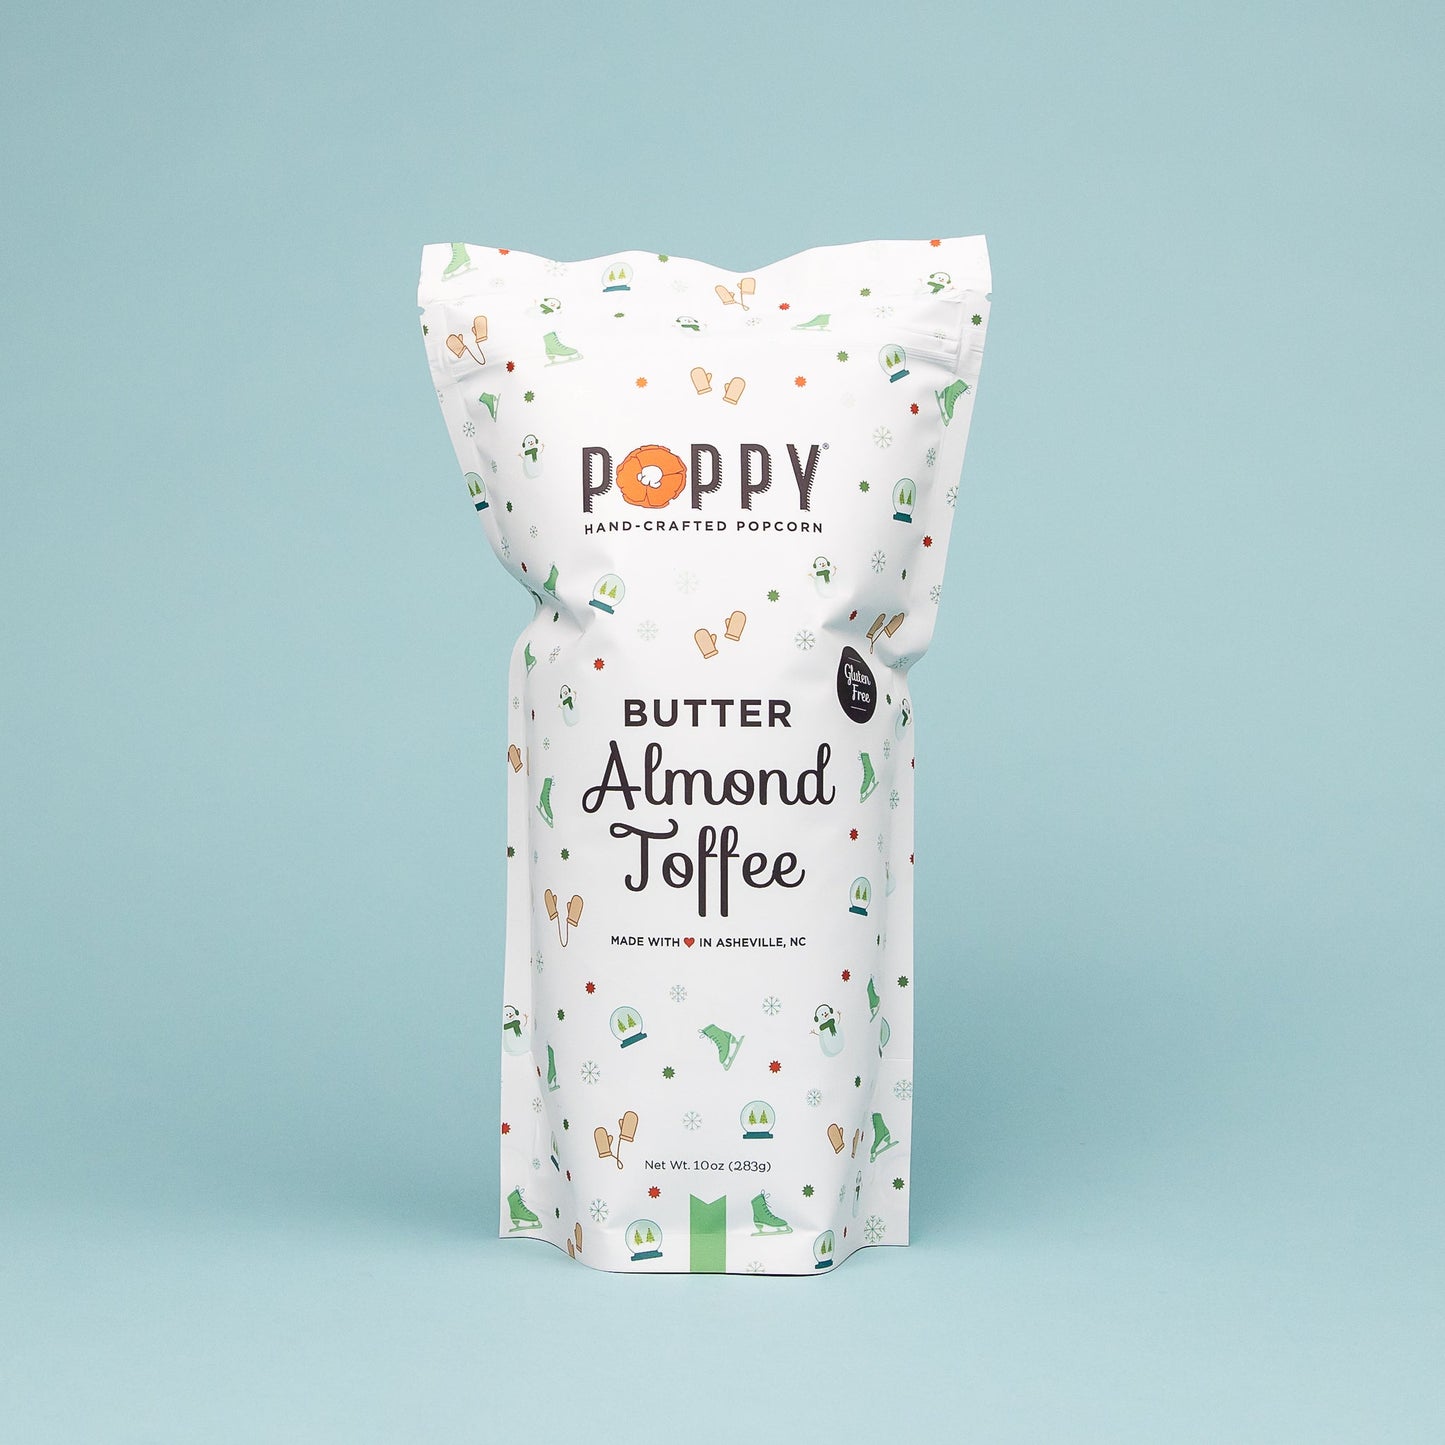 Poppy Popcorn "Butter Almond Toffee" Market Bag